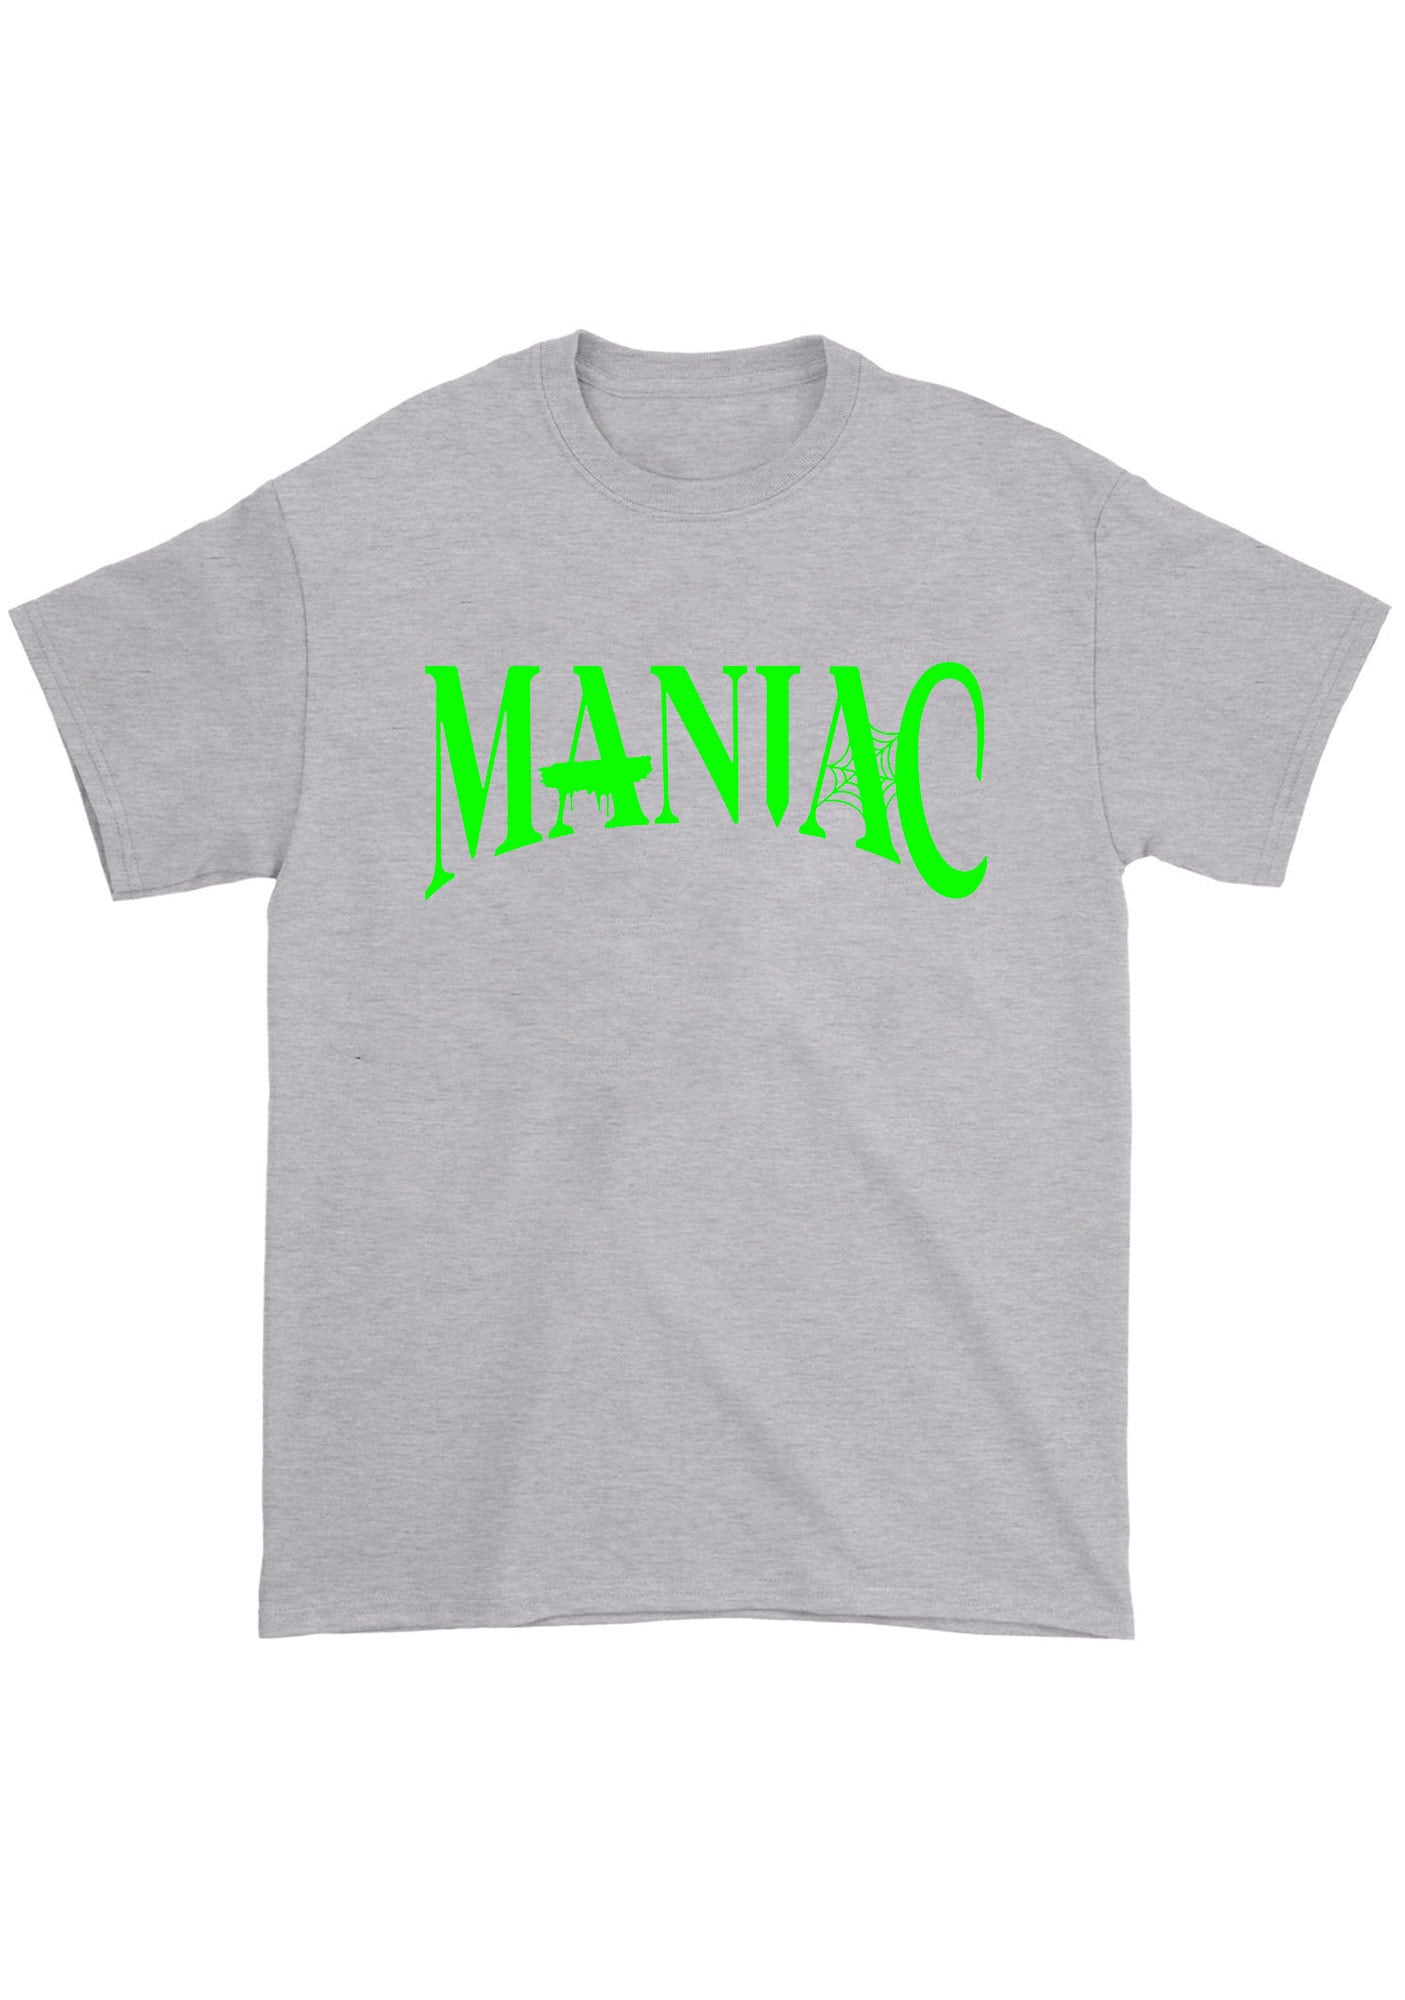 Maniac Spider Skz Kpop Chunky Shirt